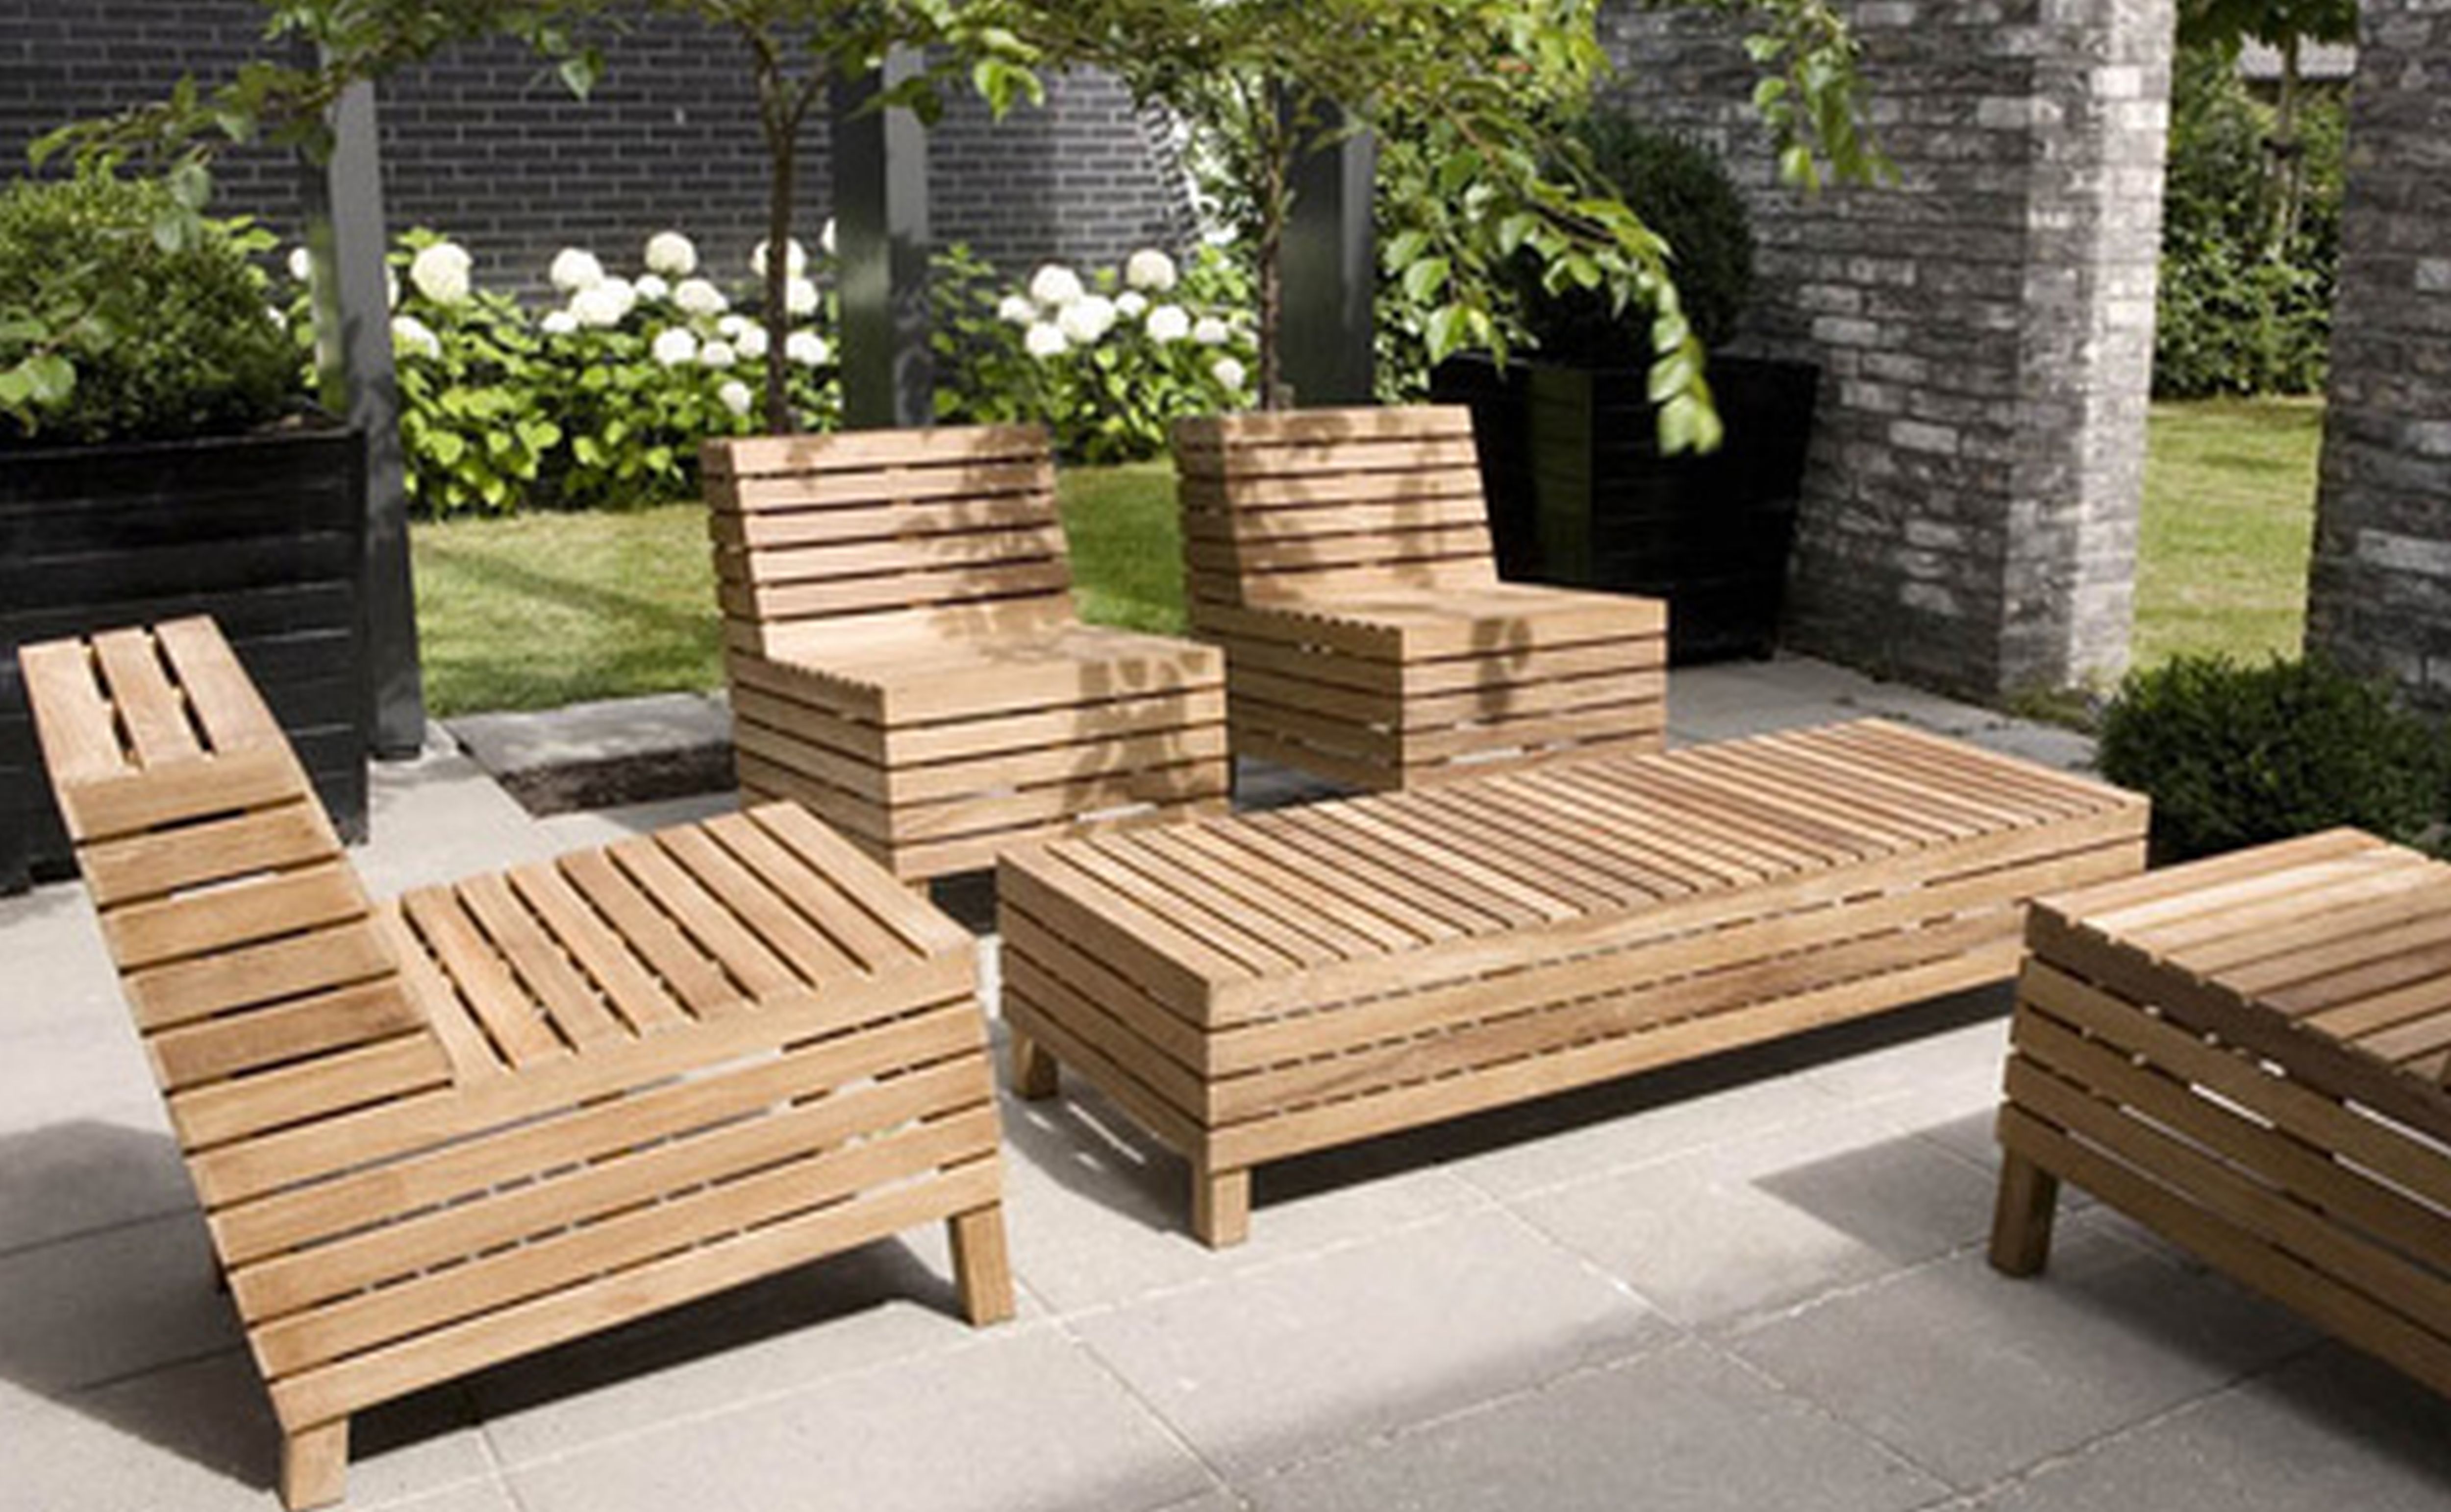 wooden patio furniture wood outdoor furniture image online meeting rooms inside wooden outdoor INHWREO